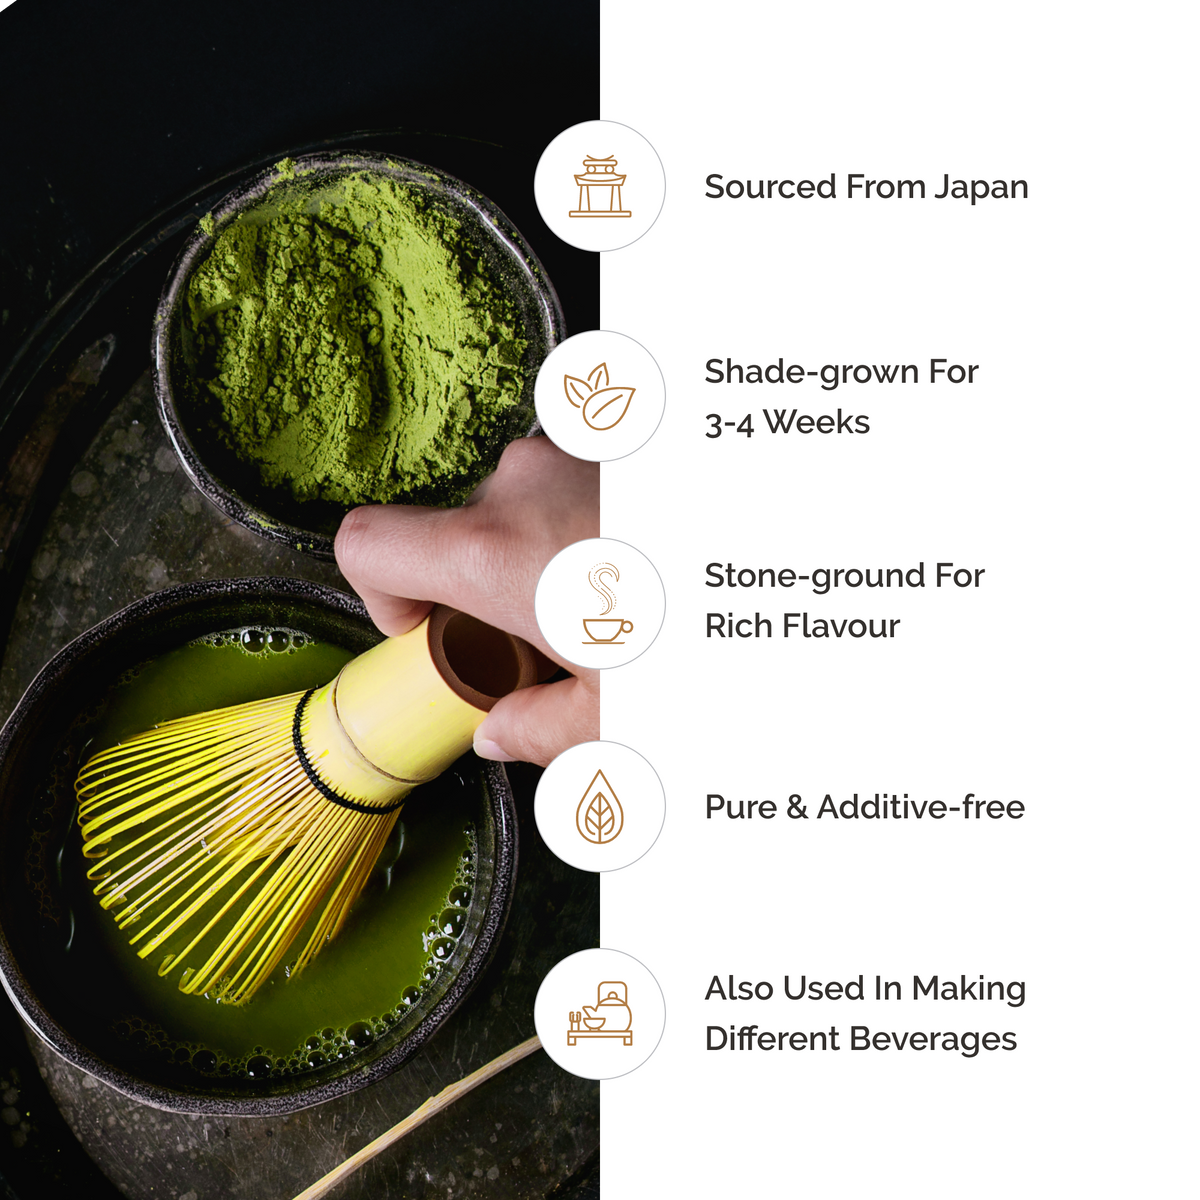 Culinary Grade Matcha Green Tea - 50g Pouch | 100% Authentic Japanese Matcha